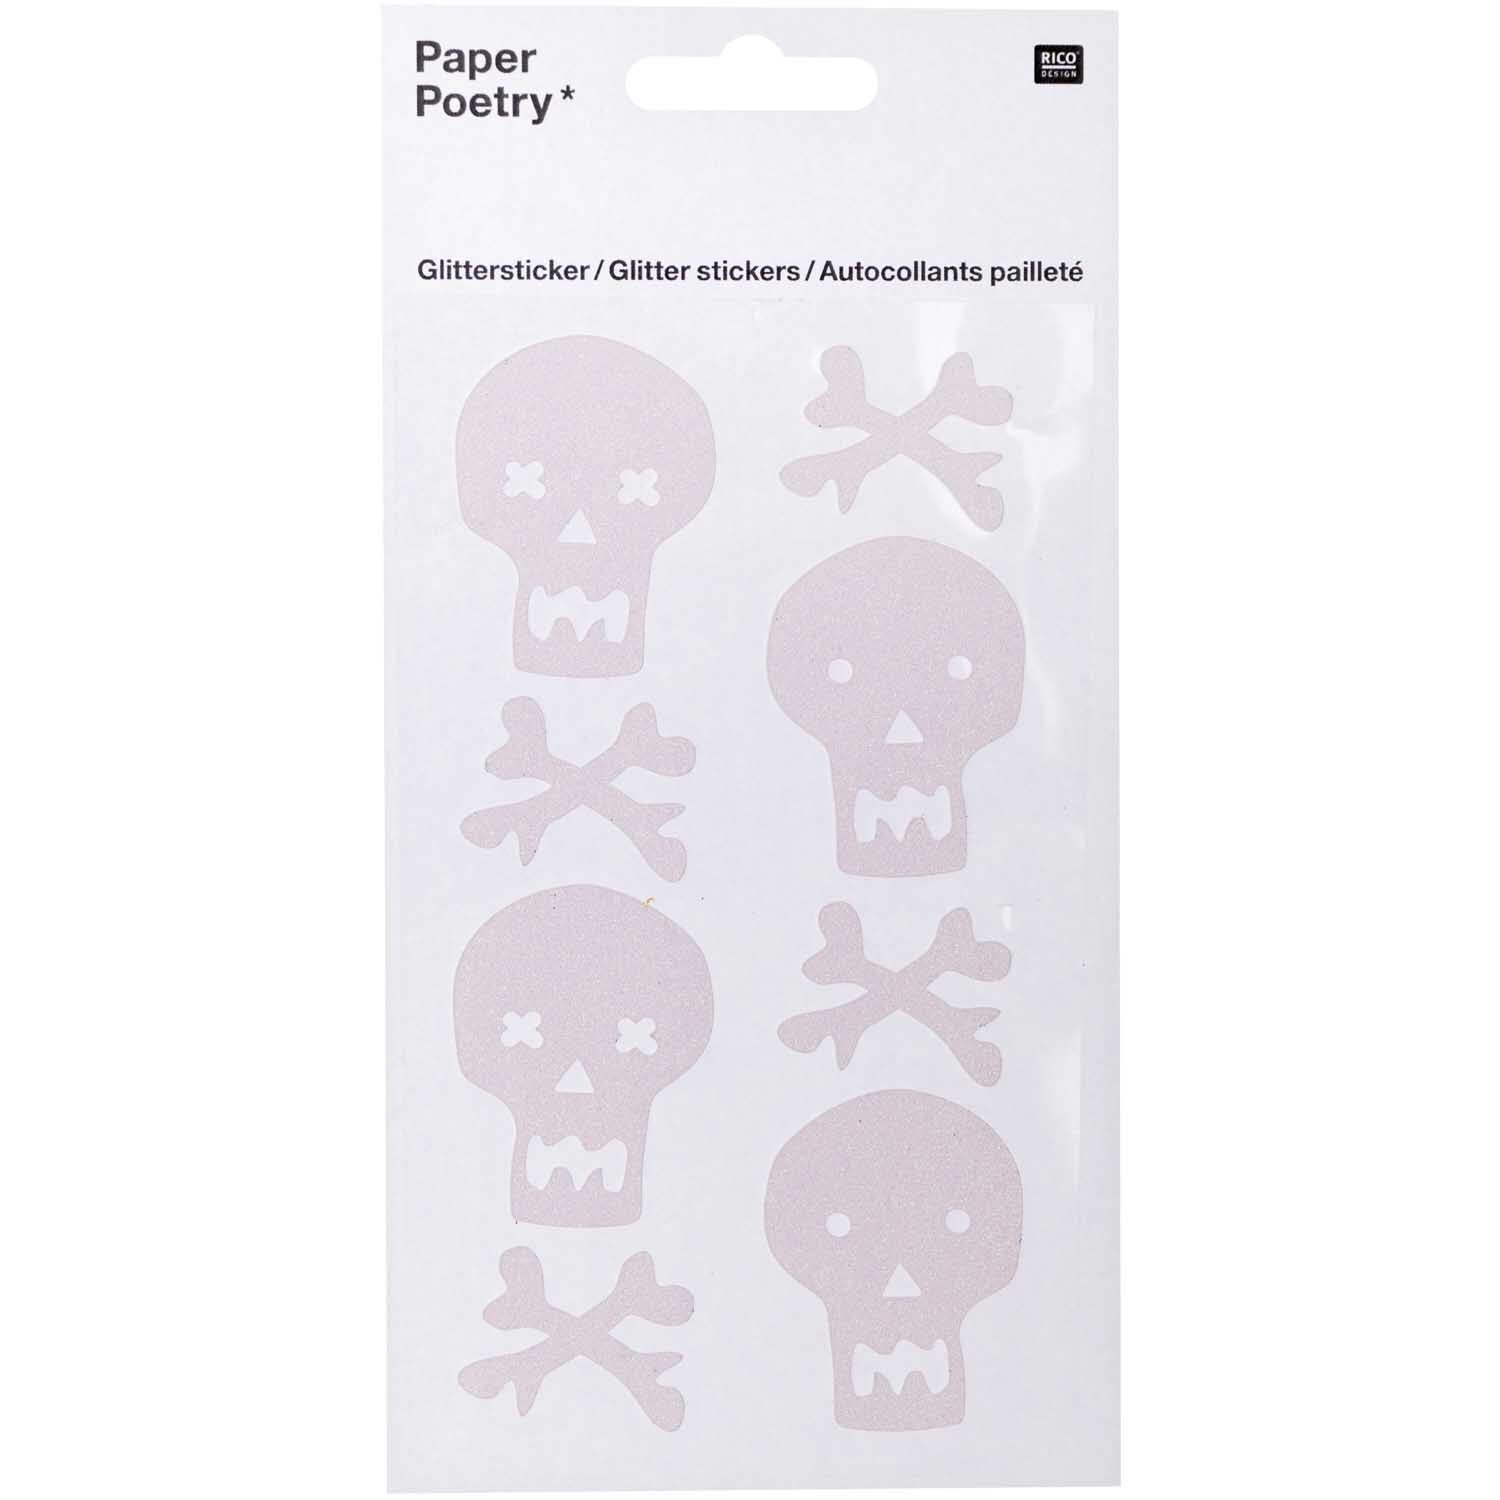 Paper Poetry Glittersticker Totenschädel